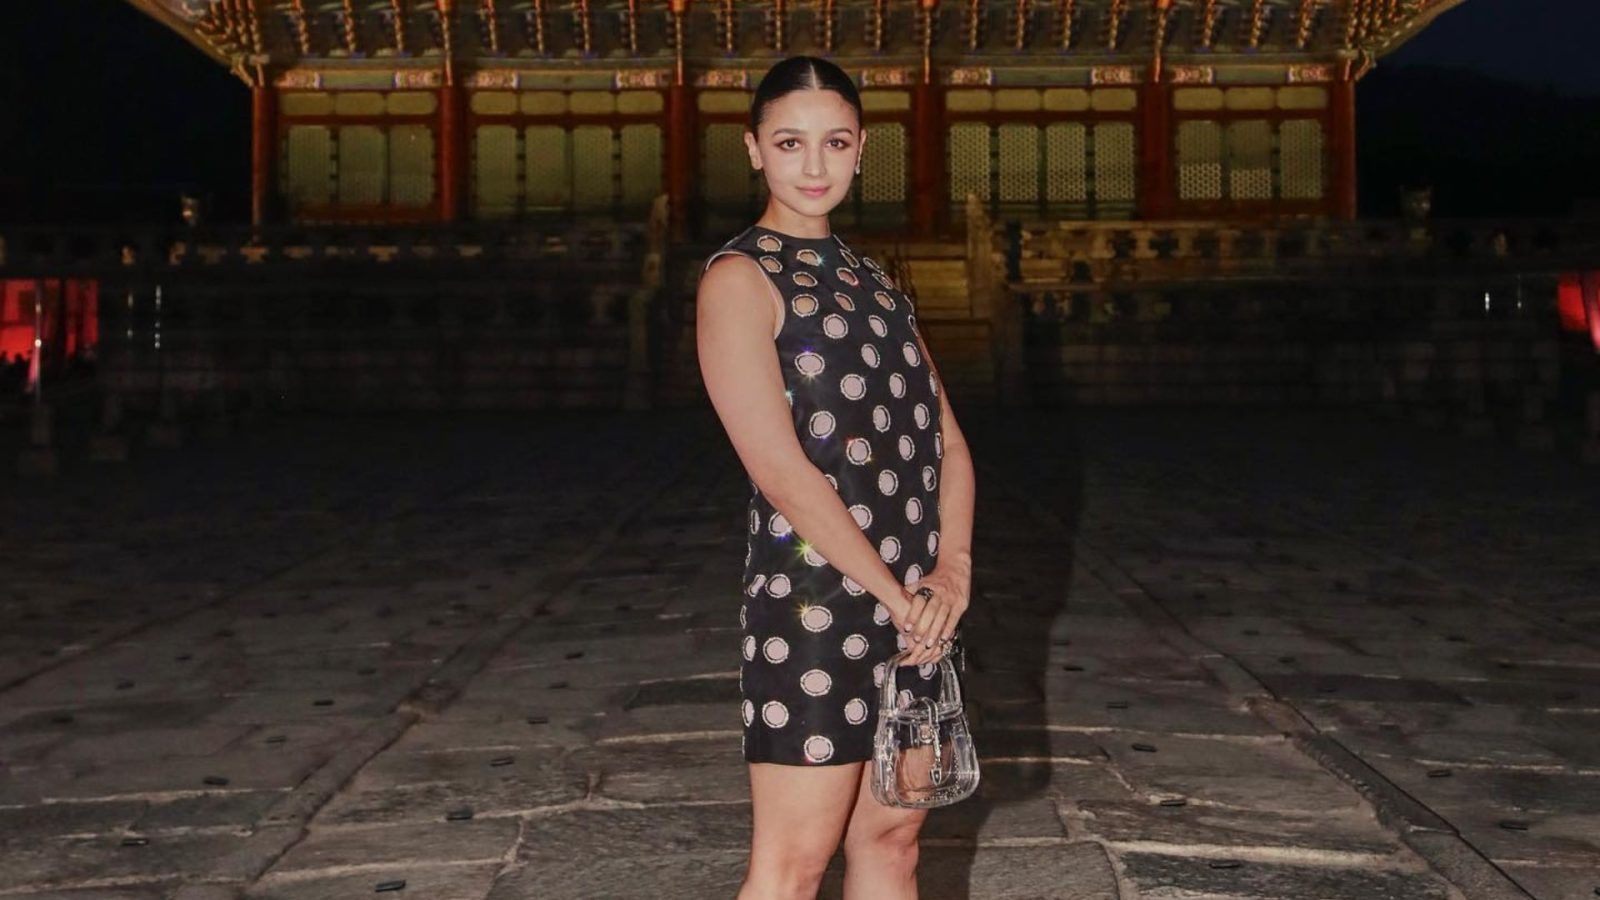 Alia Bhatt named as Gucci's first Indian global ambassador - Life